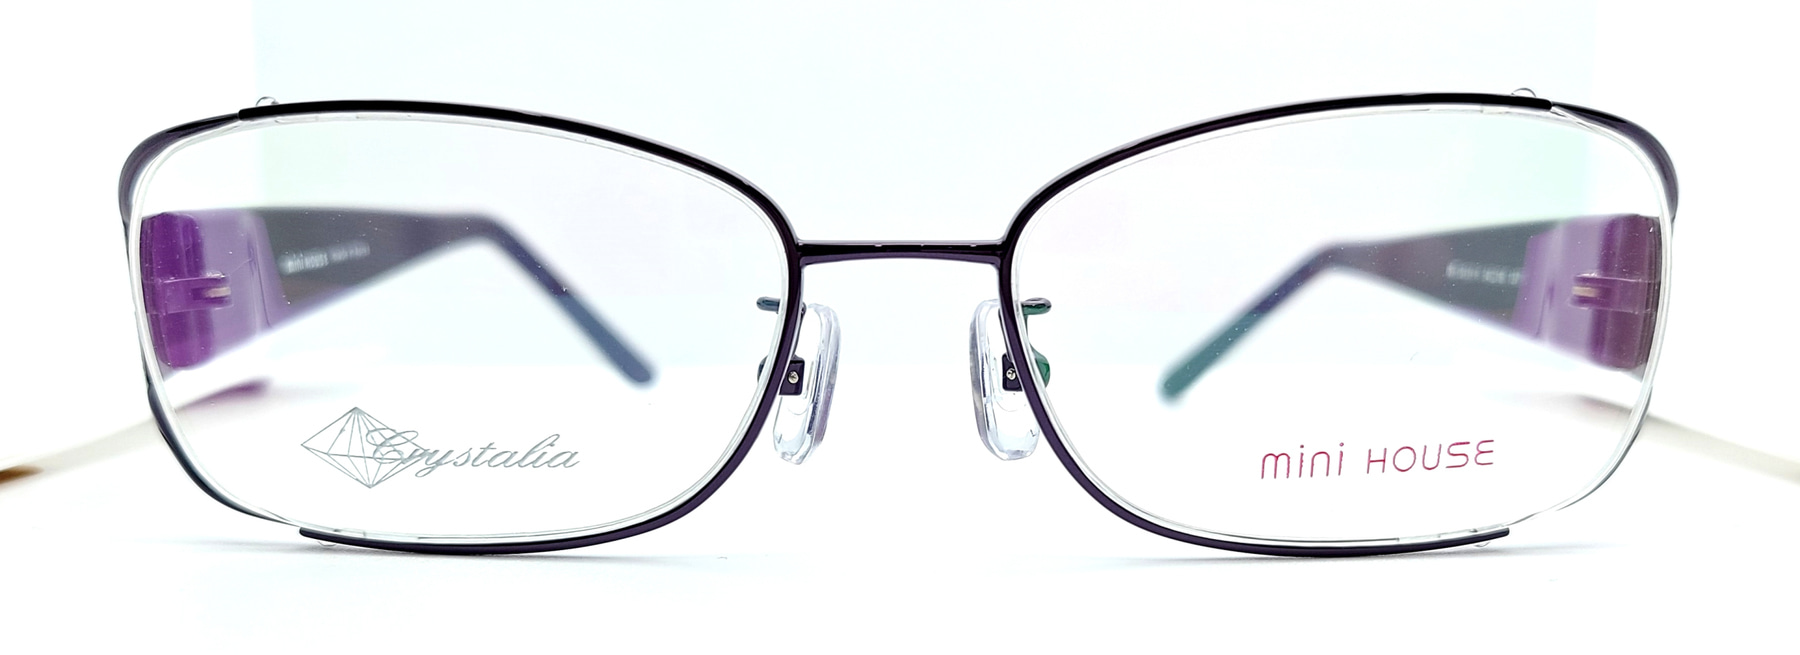 MINIHOUSE M-1011-1, Korean glasses, sunglasses, eyeglasses, glasses